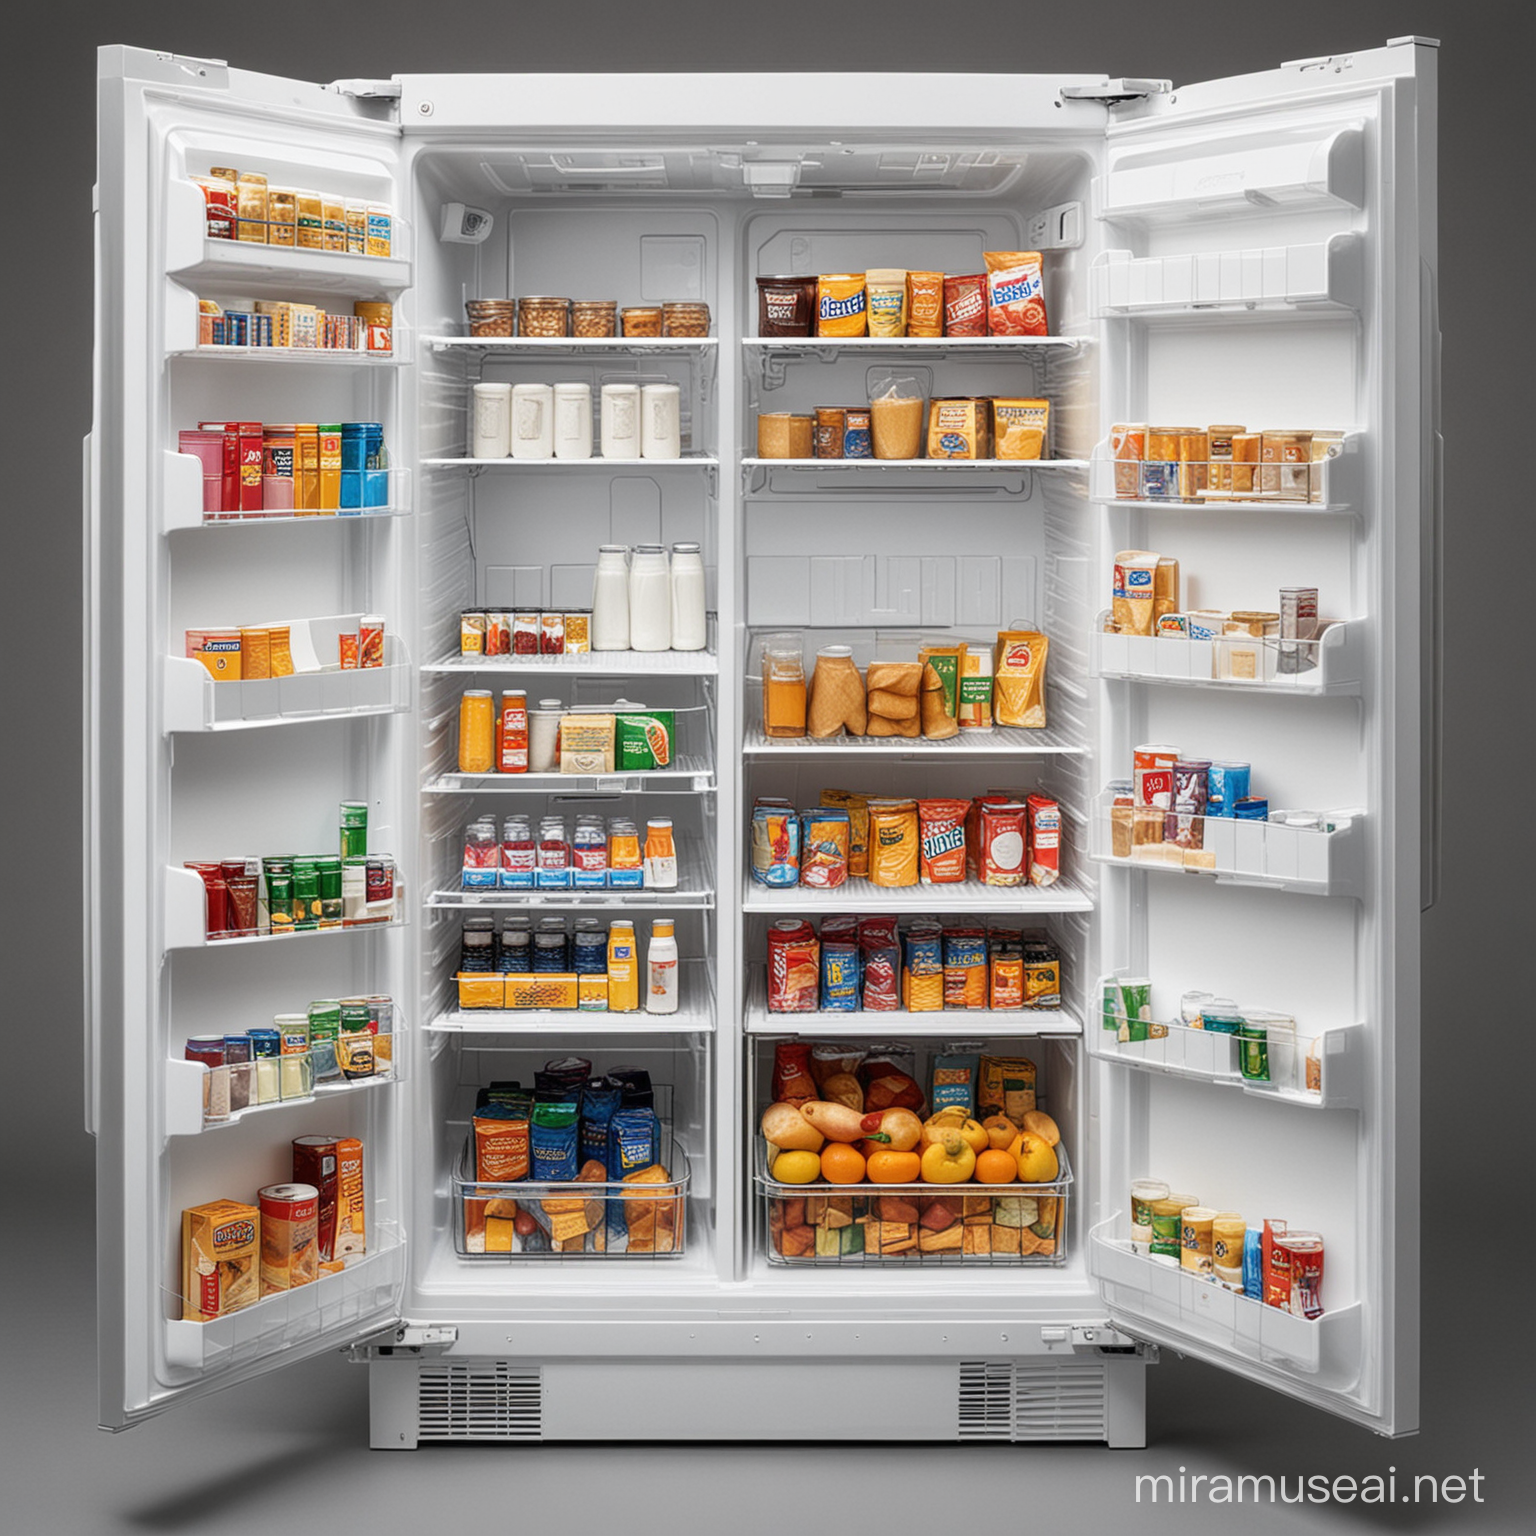 Tetris Game Food Art Creative Arrangement in Open Refrigerator